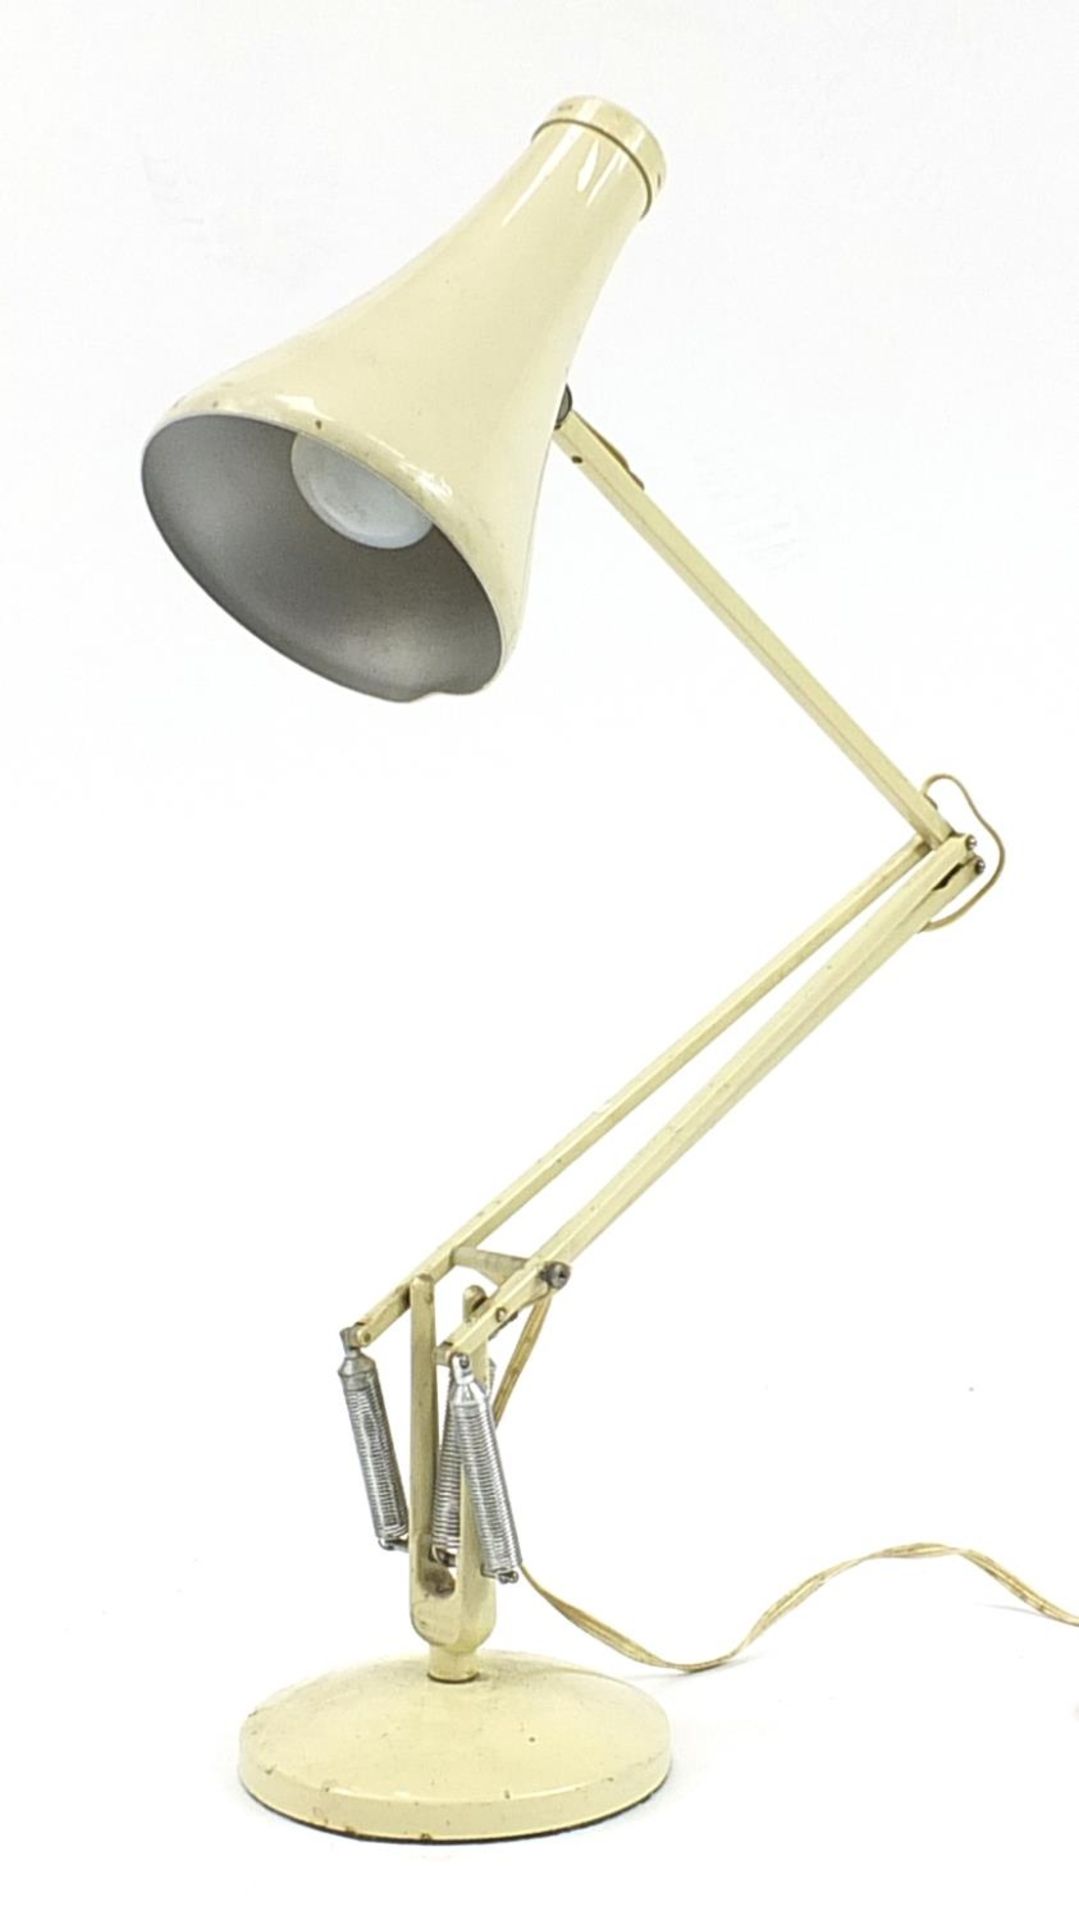 Vintage Herbert Terry Anglepoise lamp, 84cm high fully extended